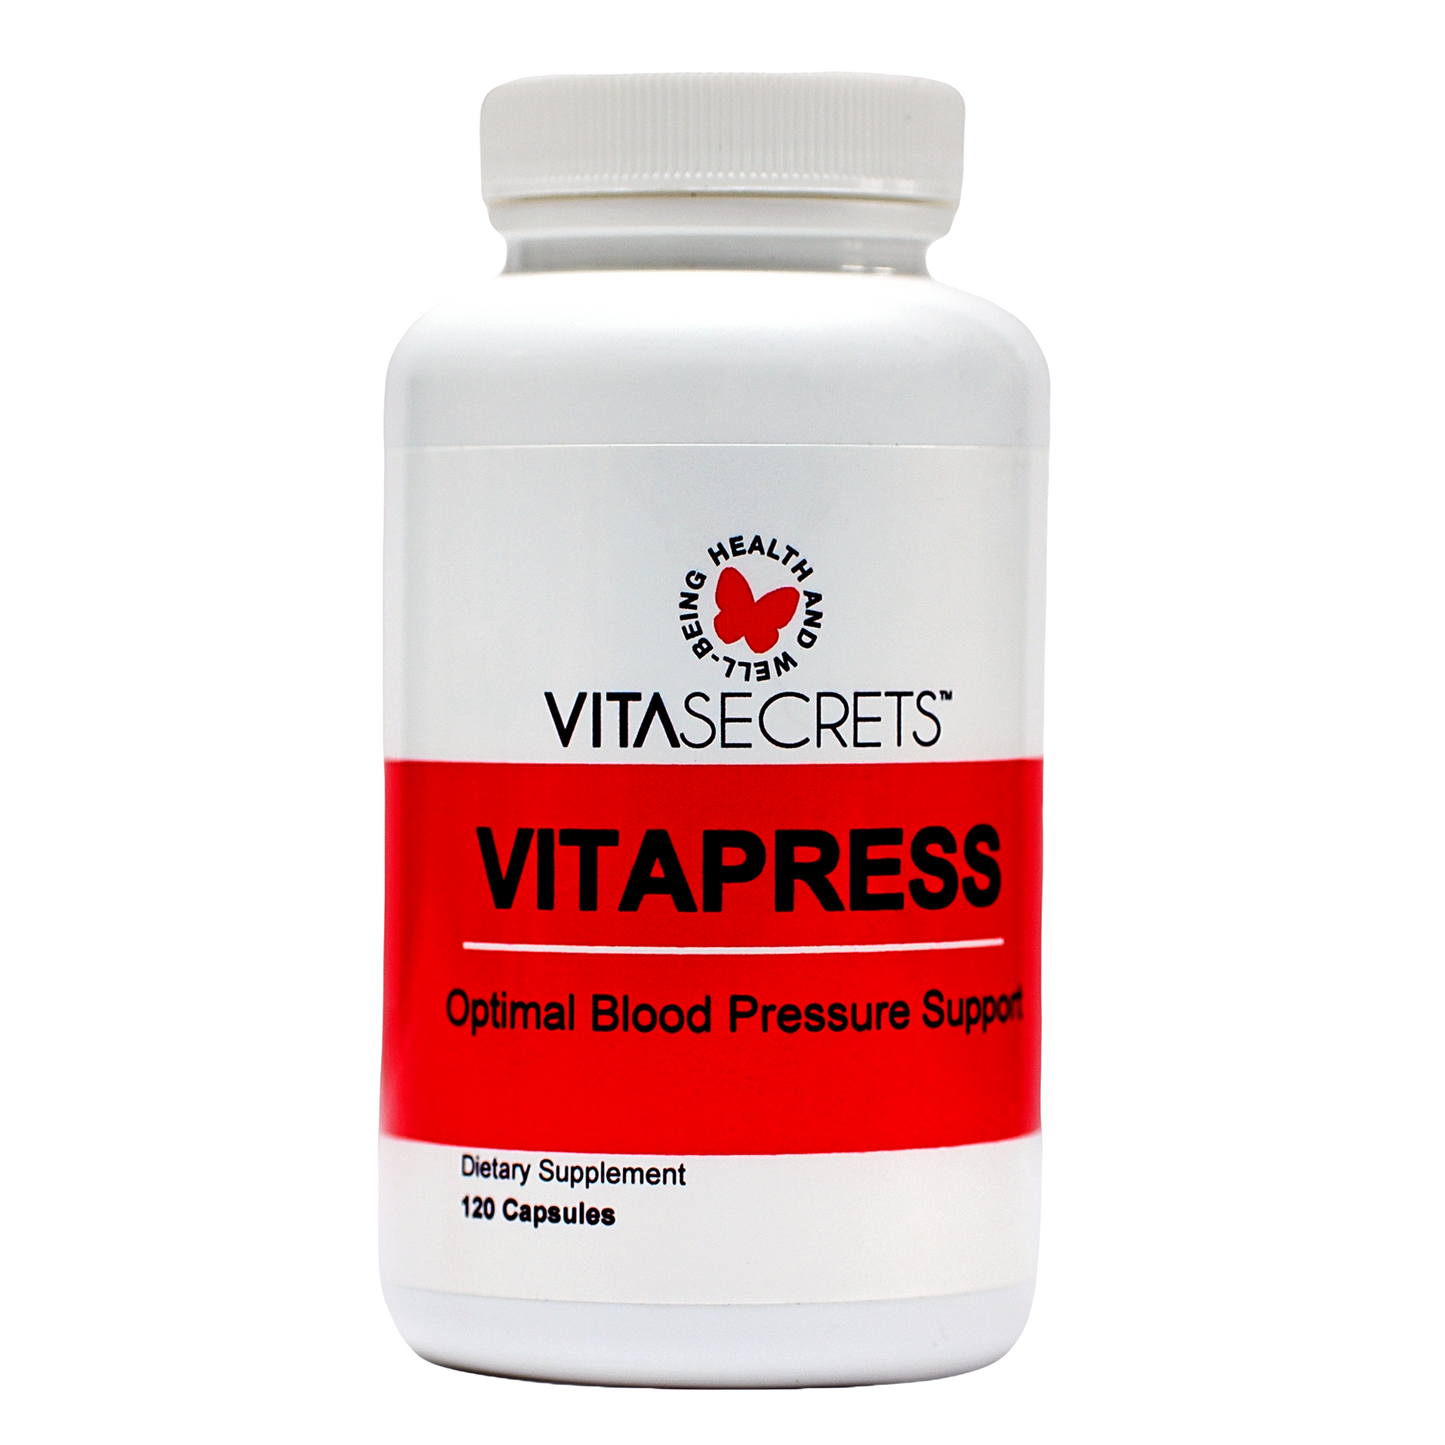 Vitapress (Optimal Blood Pressure Support)